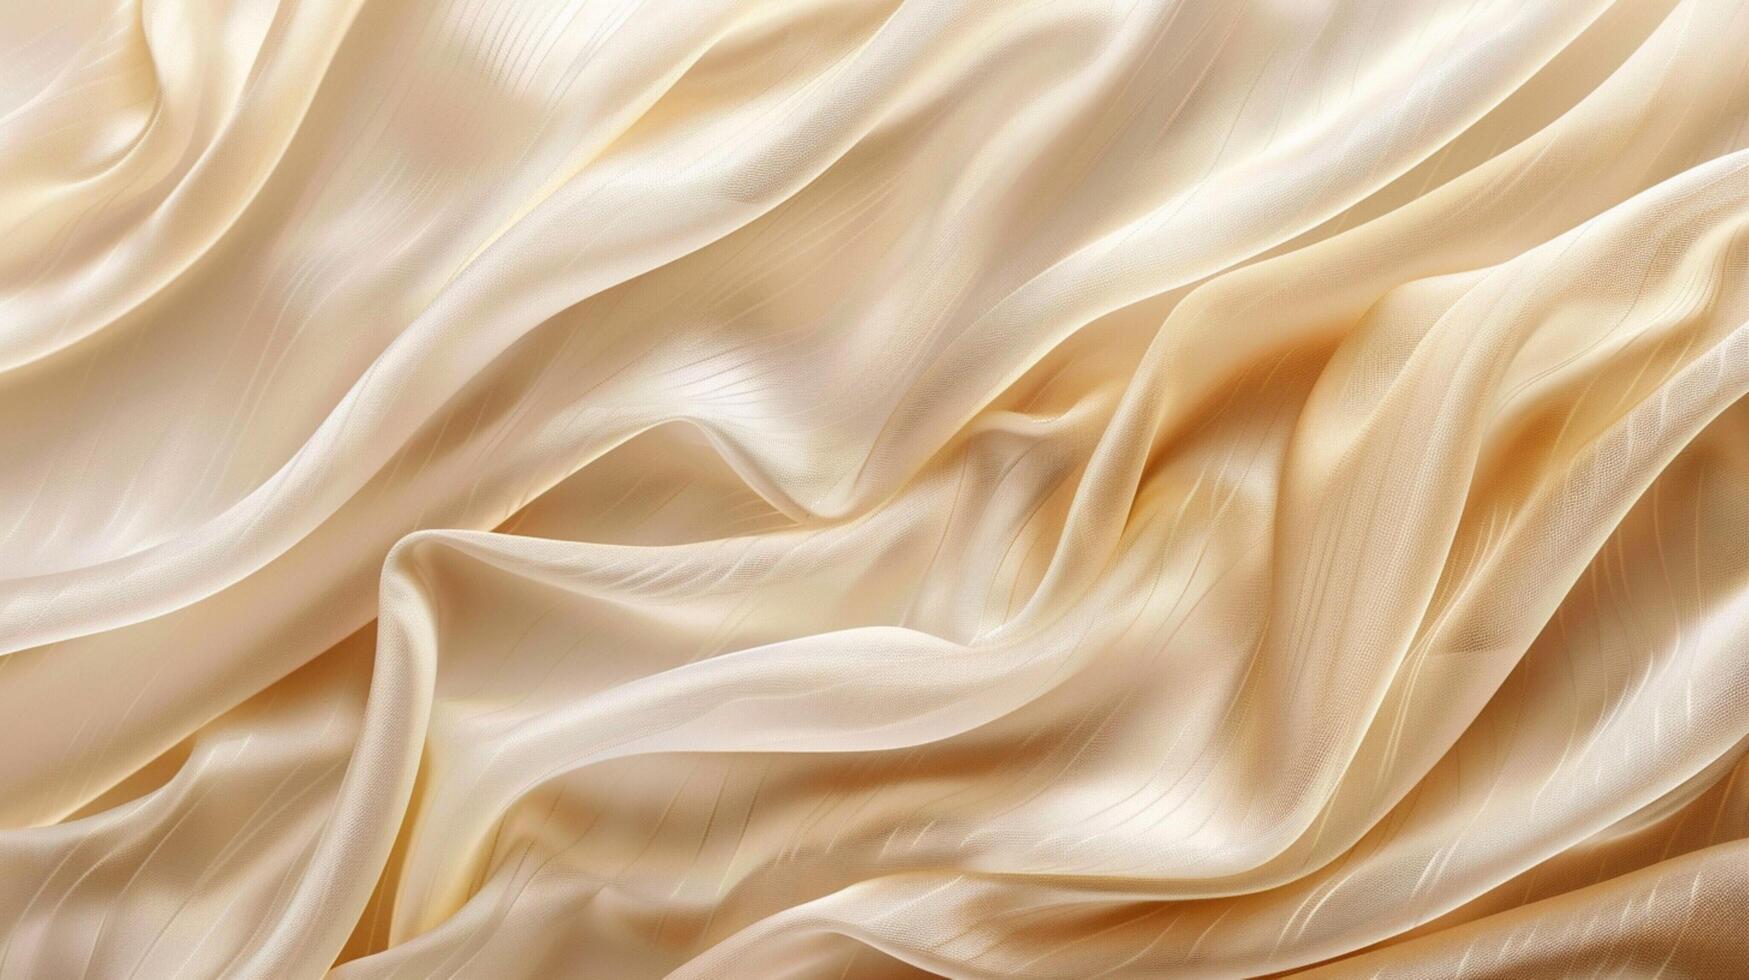 abstract luxury light cream beige brown photo